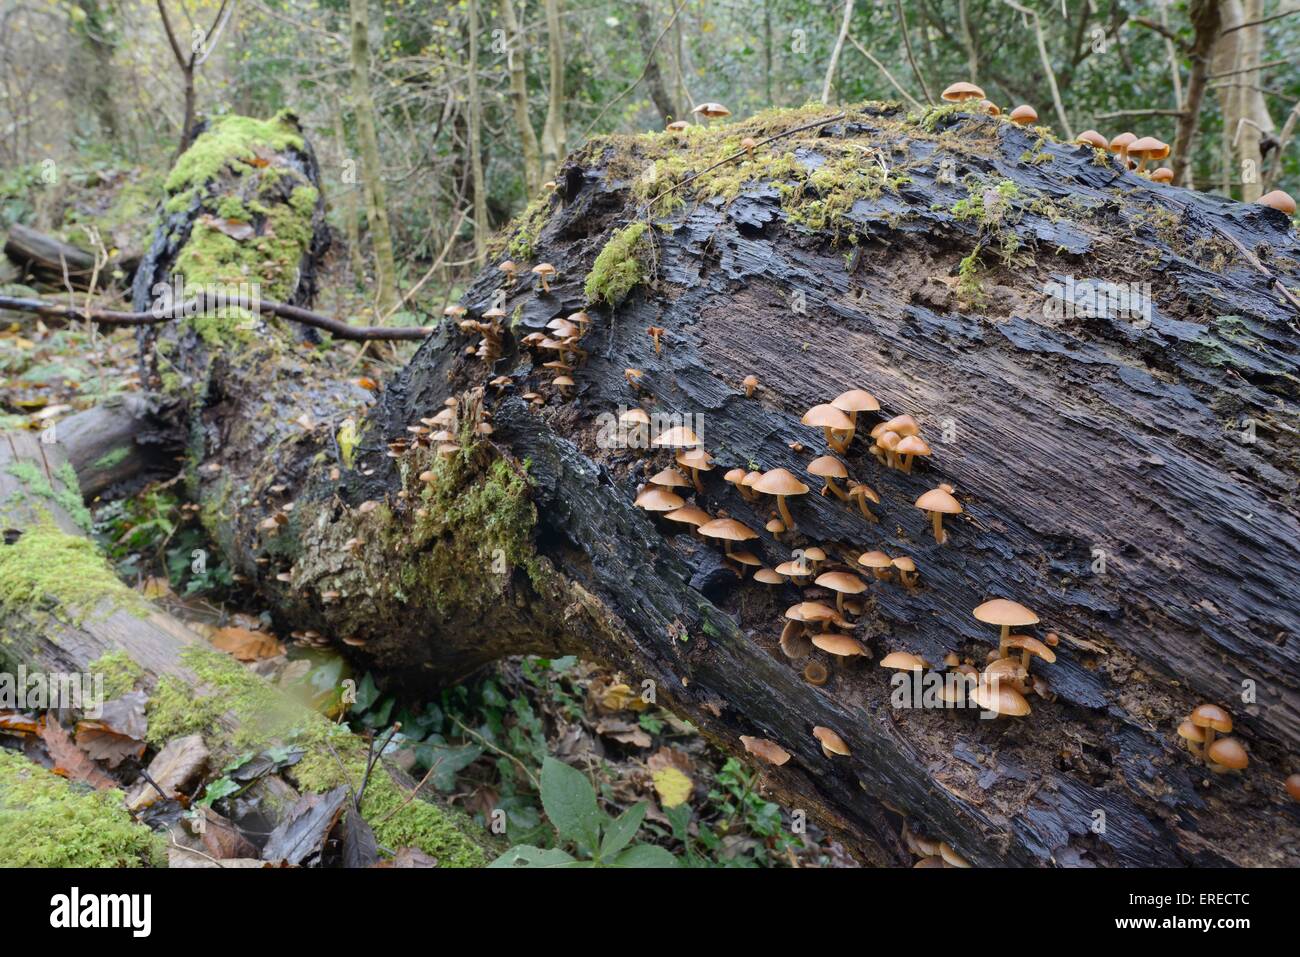 Common stump brittlestem fungi (Psathyrella piluliformis) growing on a rotten mossy log in deciduous woodland, Cornwall. Stock Photo